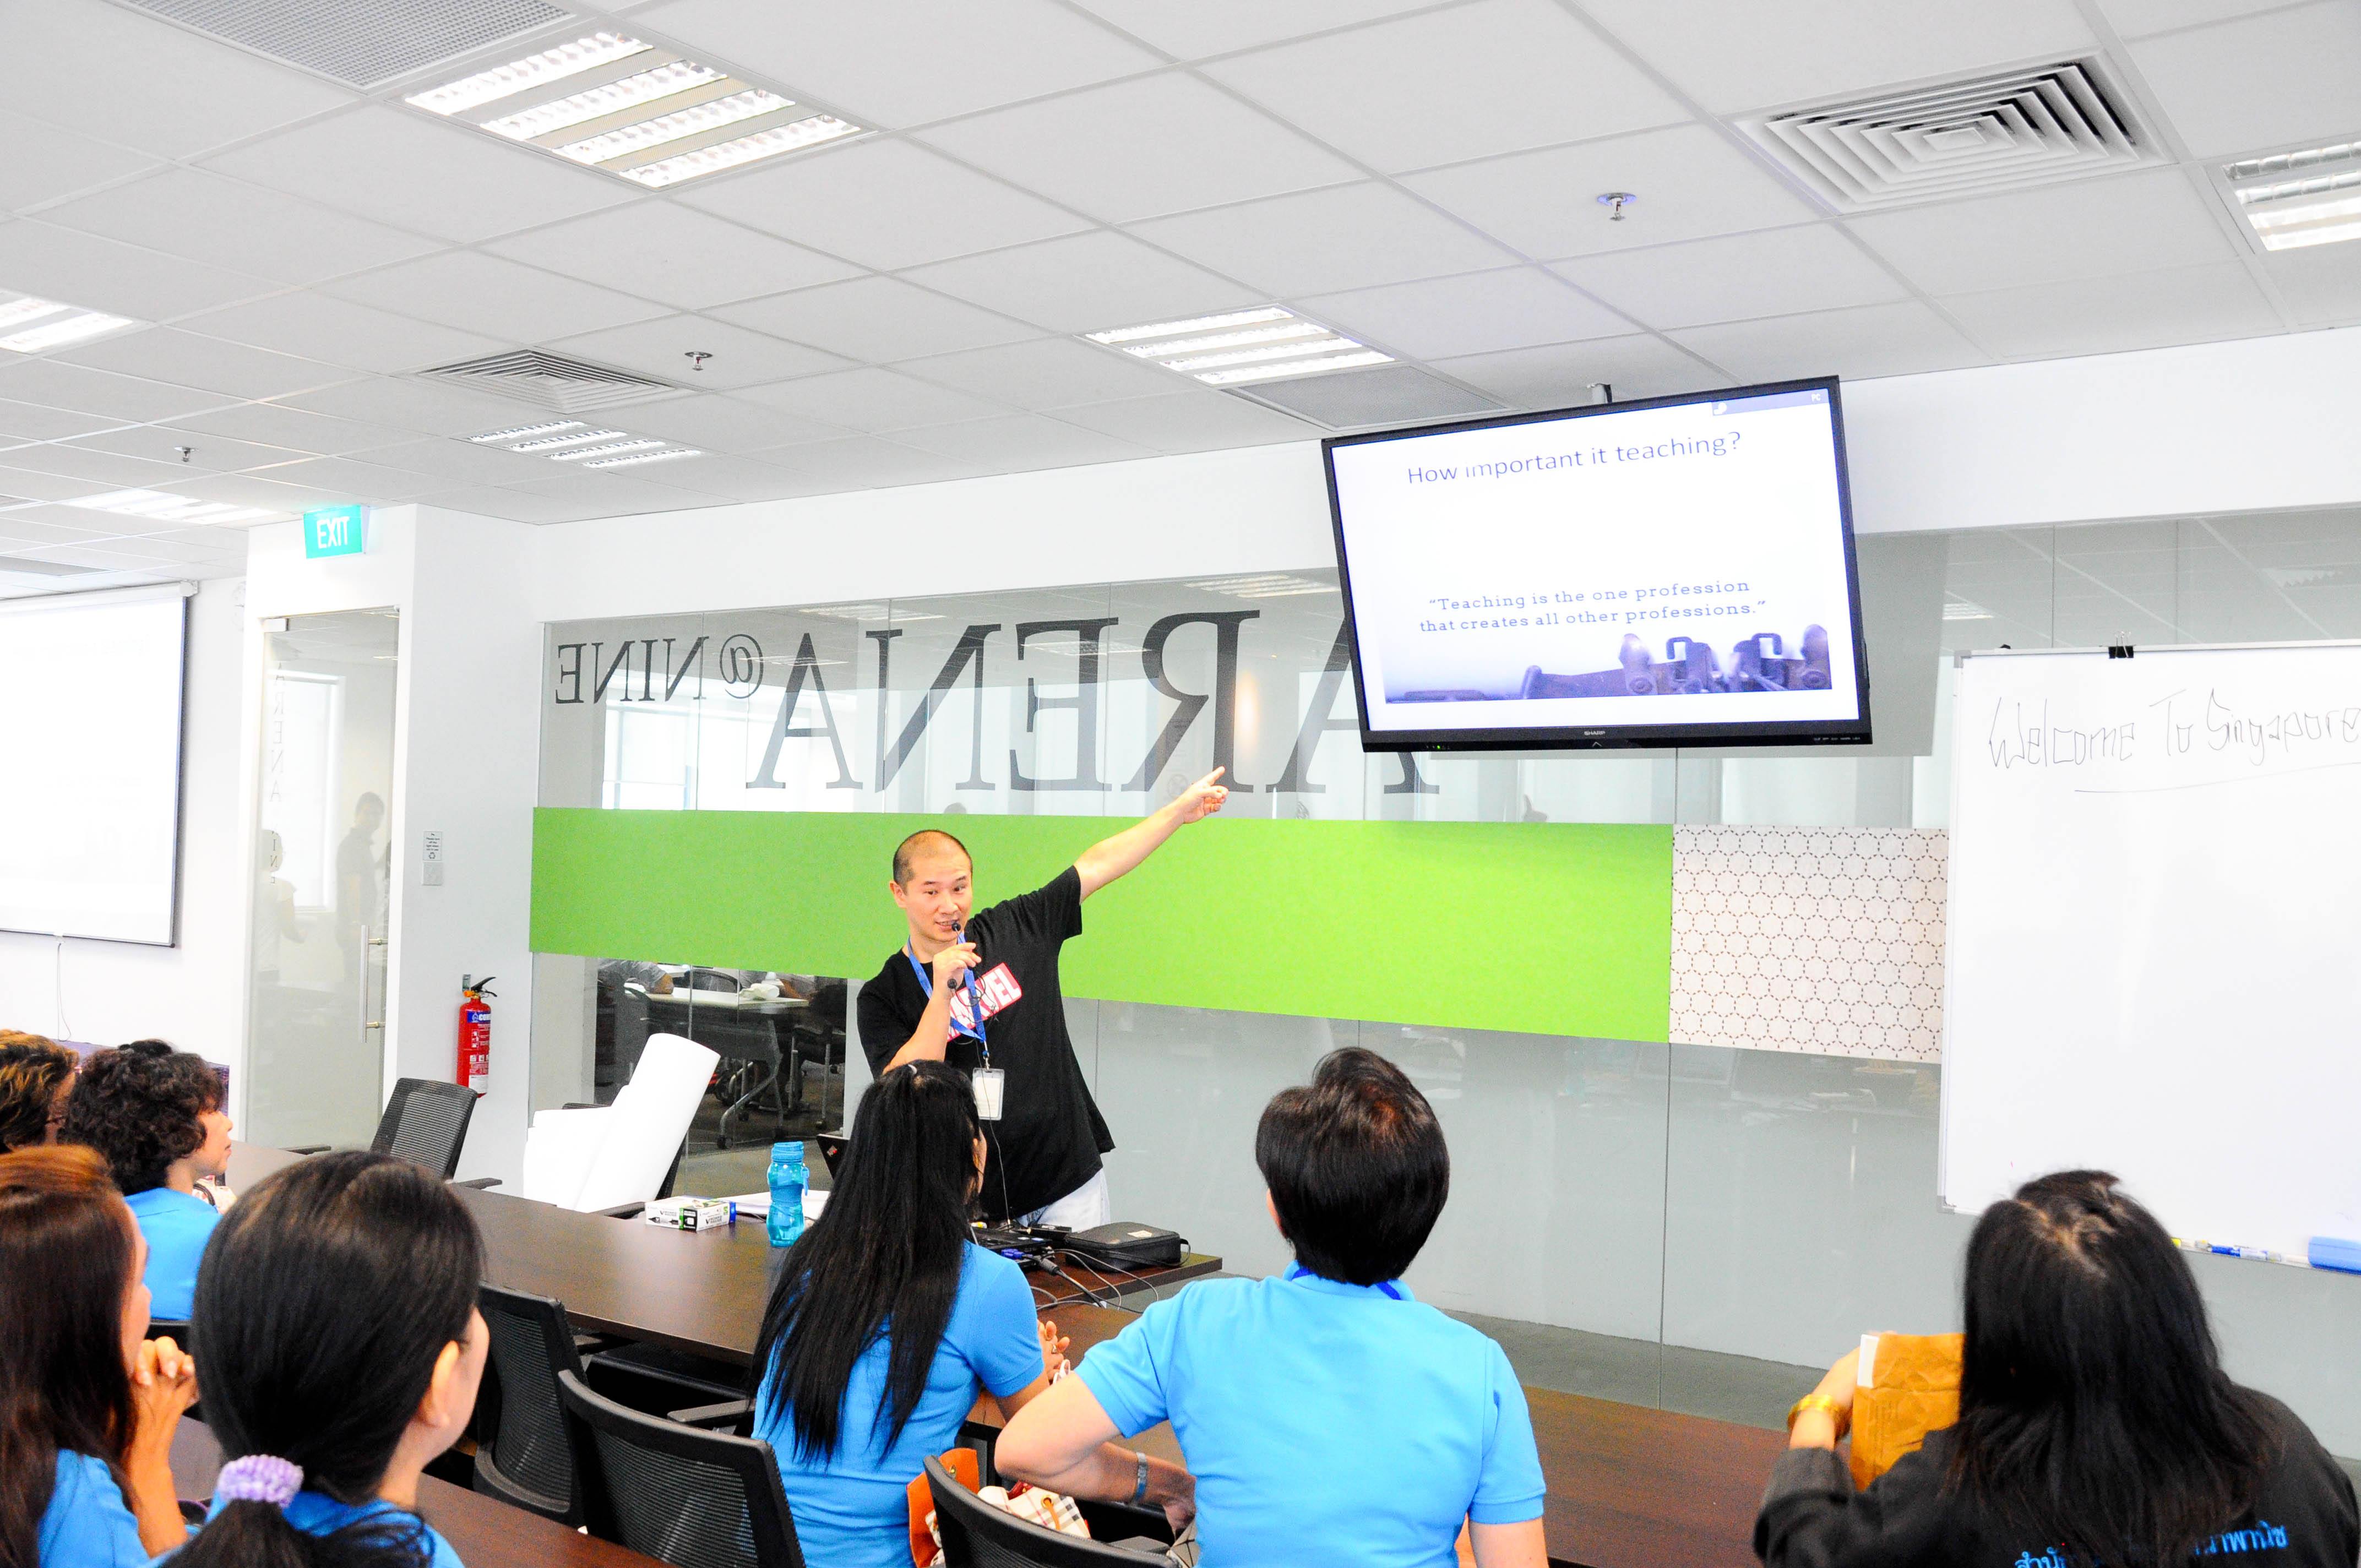 Thai Watana Panich Teachers Education Field Trip” ครั้งที่ 4 ณ ERC INSTITUTE (ERCI), SINGAPORE